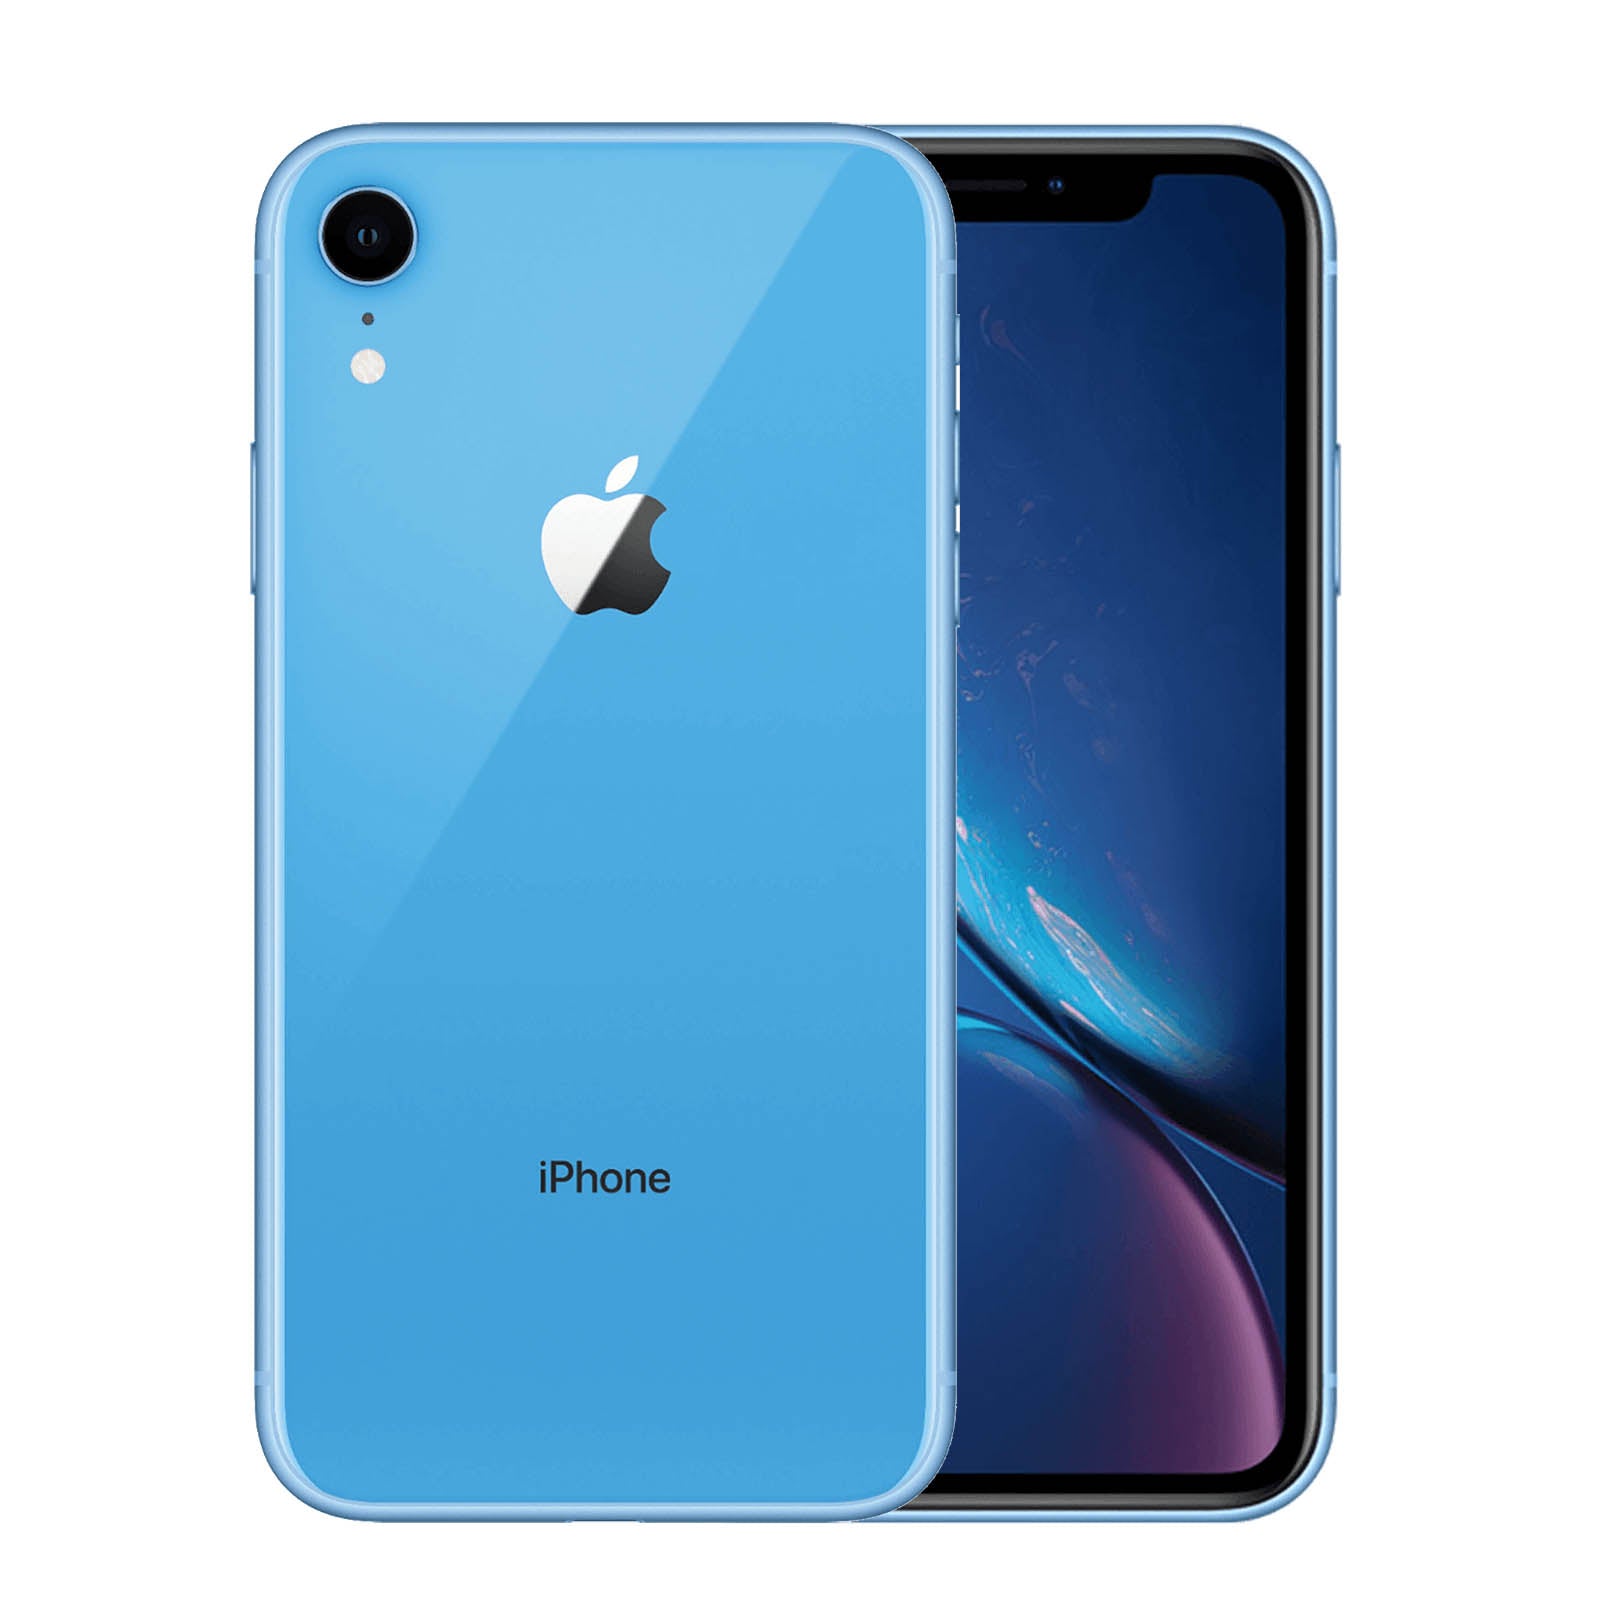 Apple iPhone XR 128GB Blue Good - Unlocked